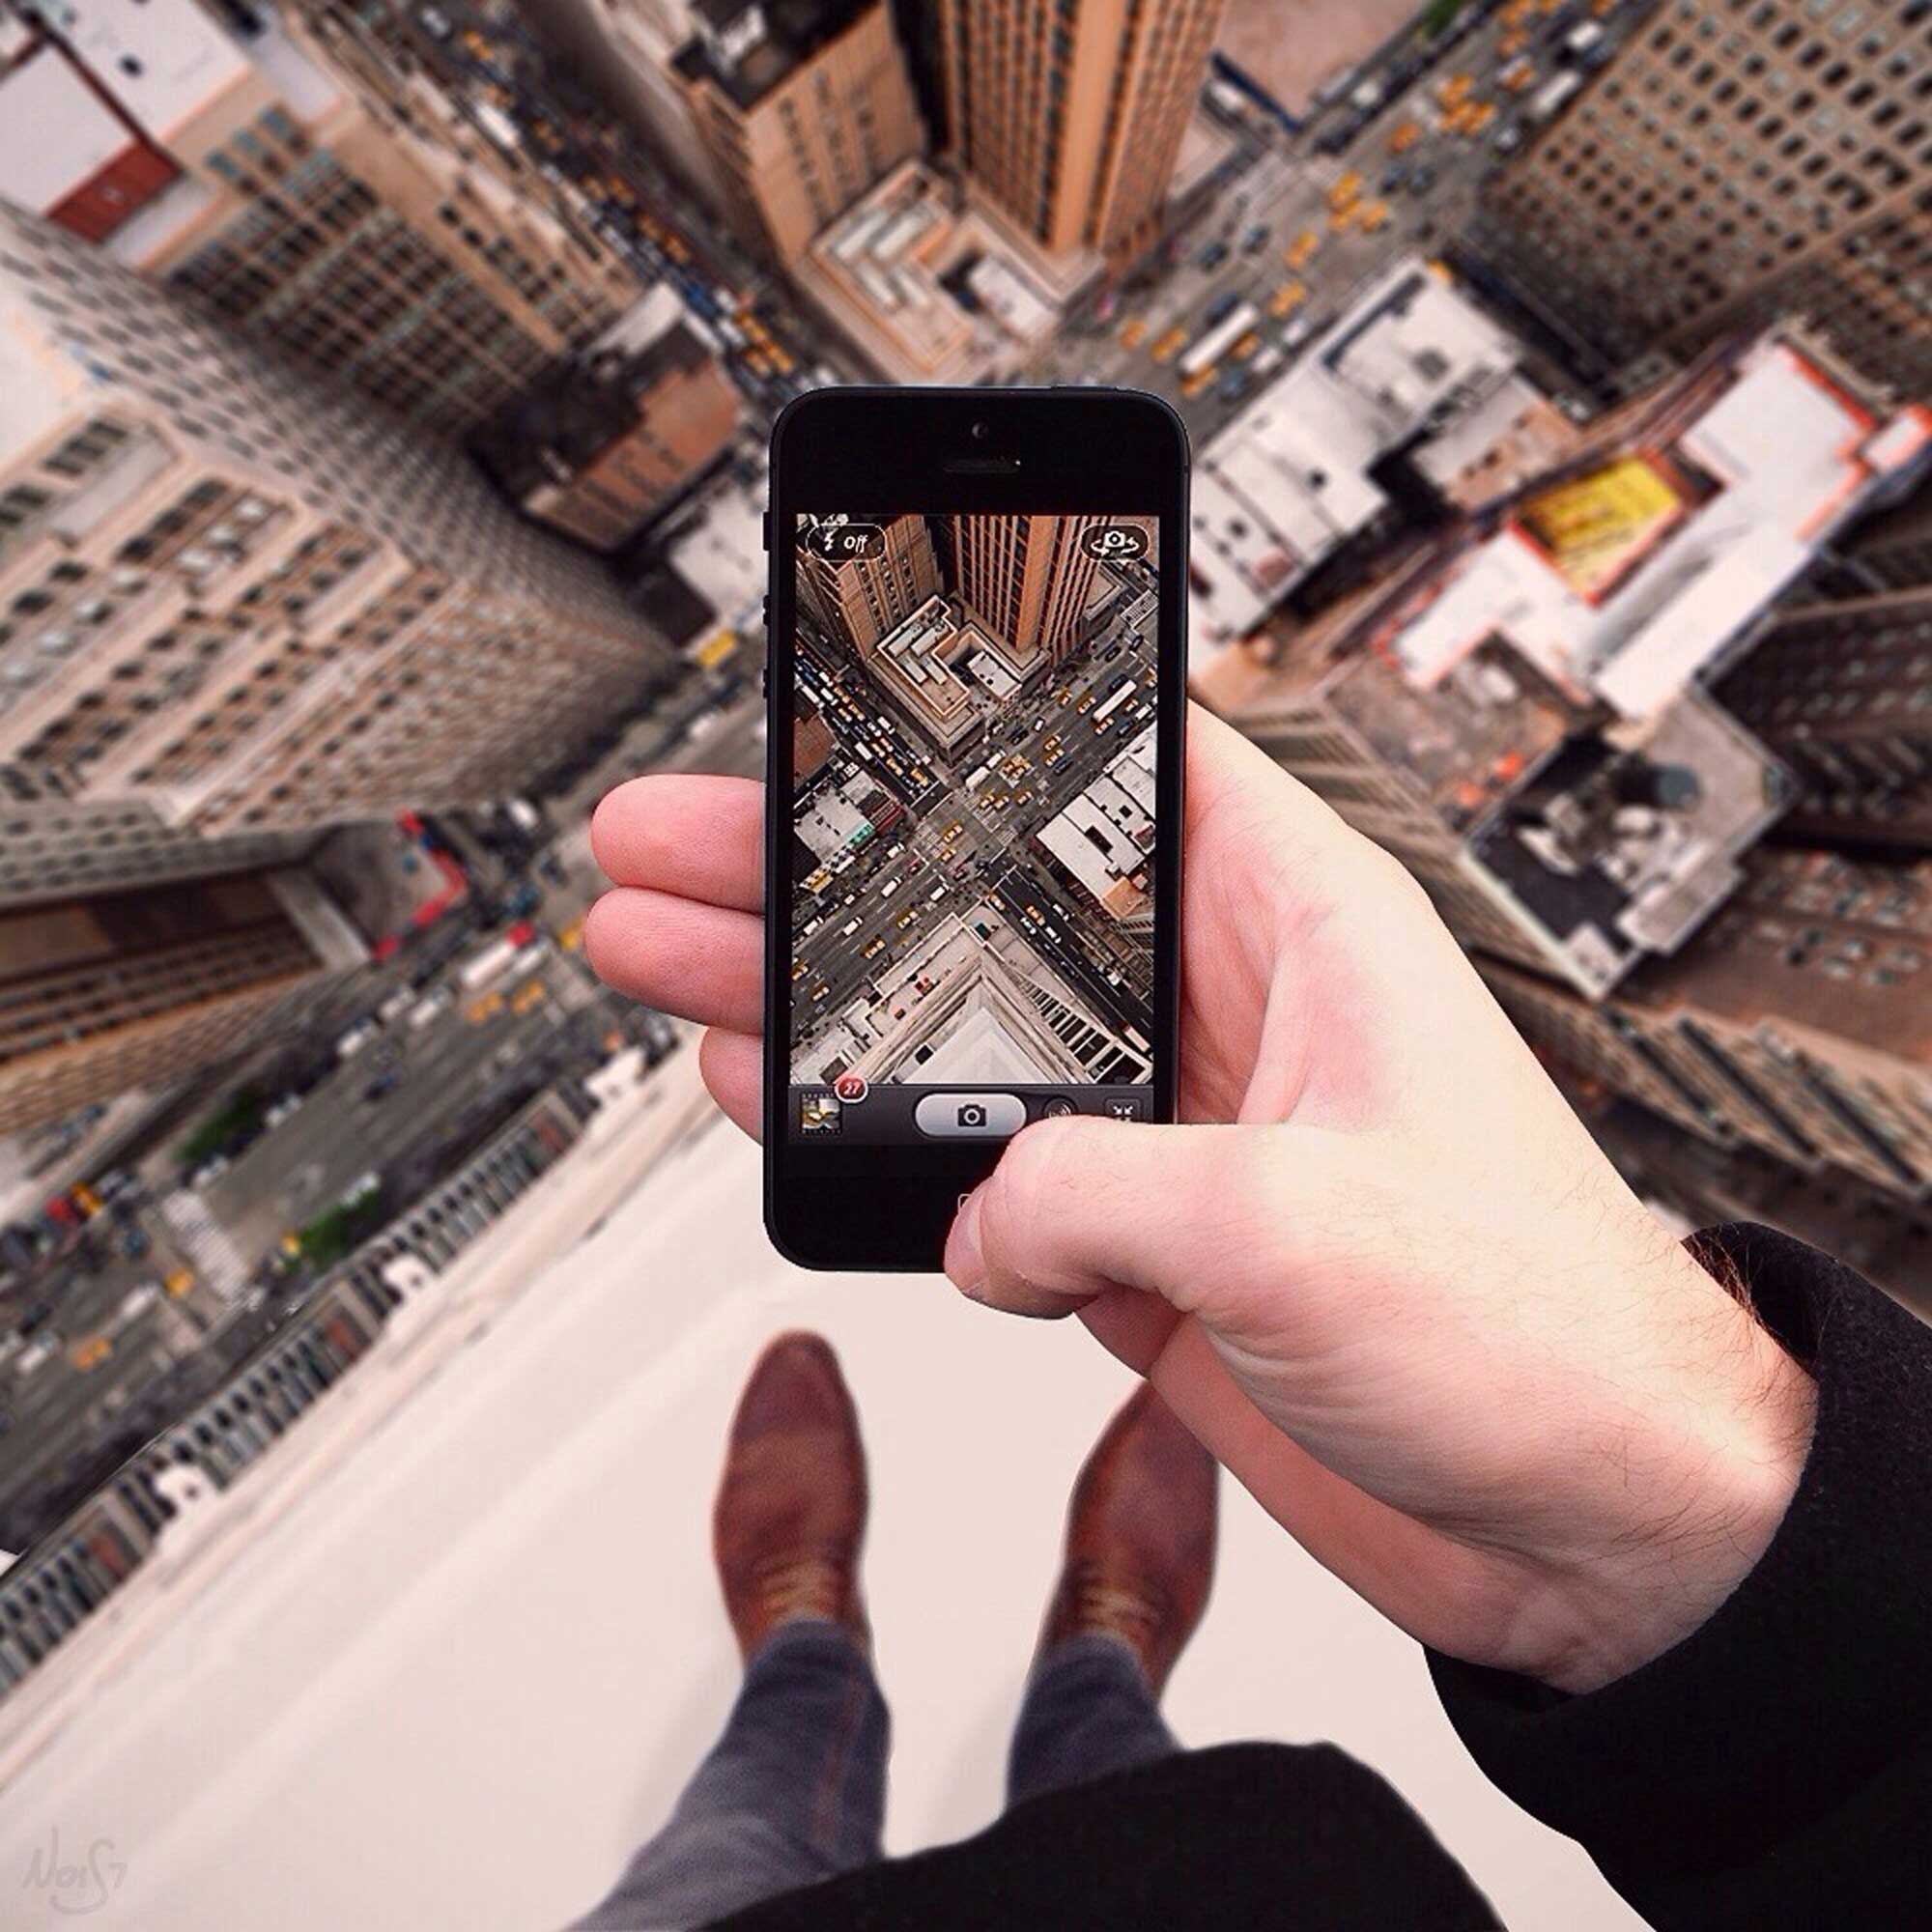 robert jahns surreal digital photo edit iphone photo skyscraper